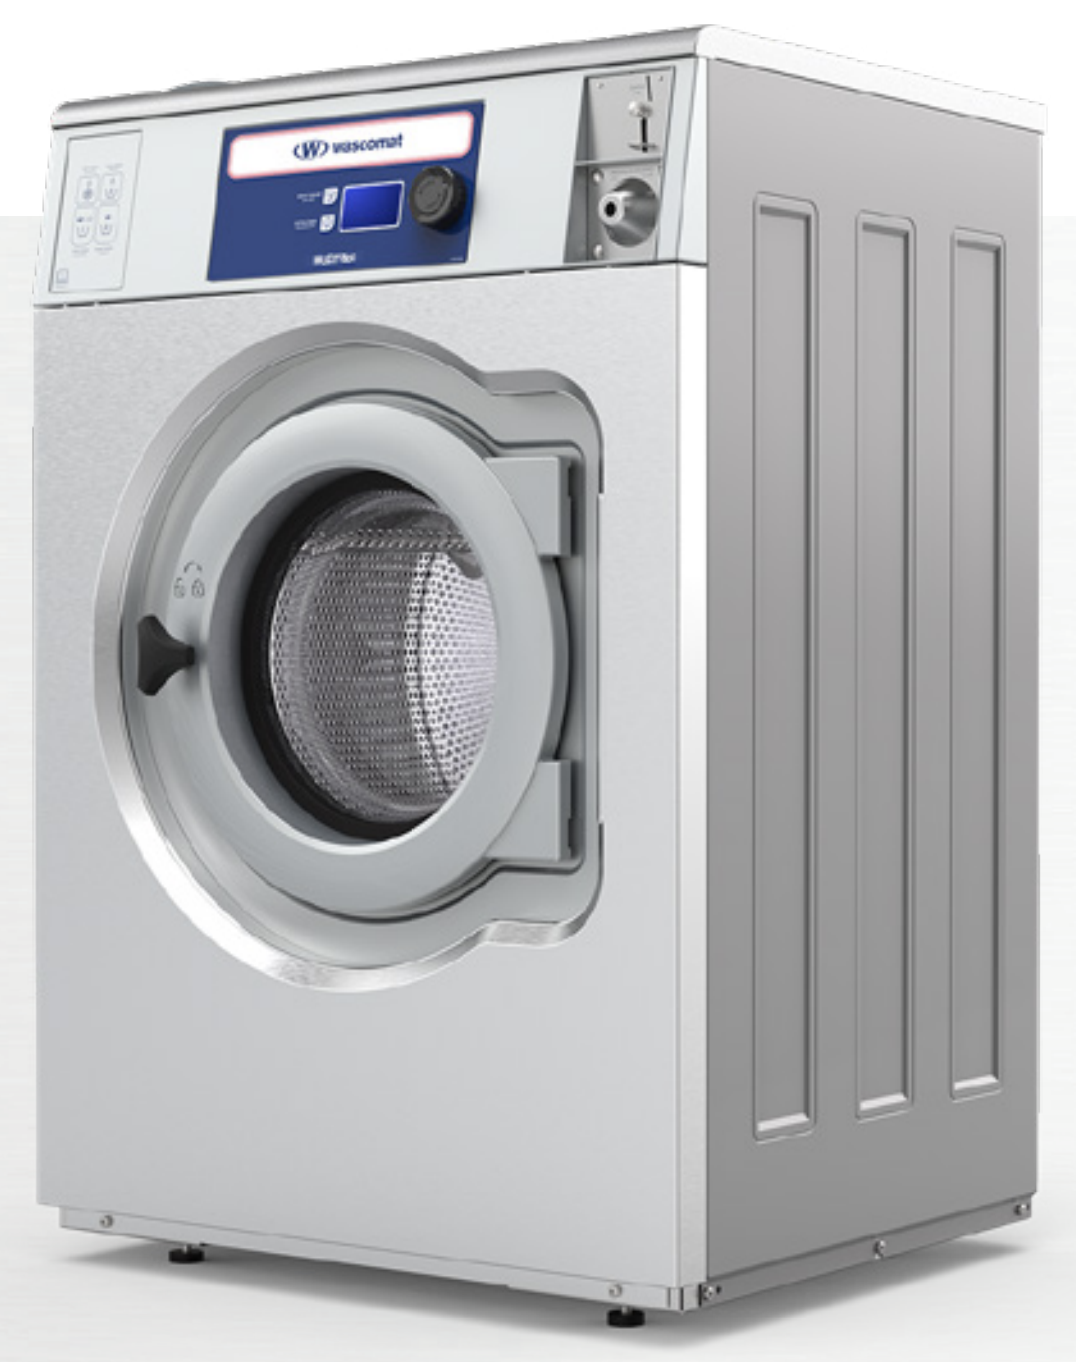 New 2022 Wascomat Wud730 - Automatic Laundry Service Of Va, Inc.